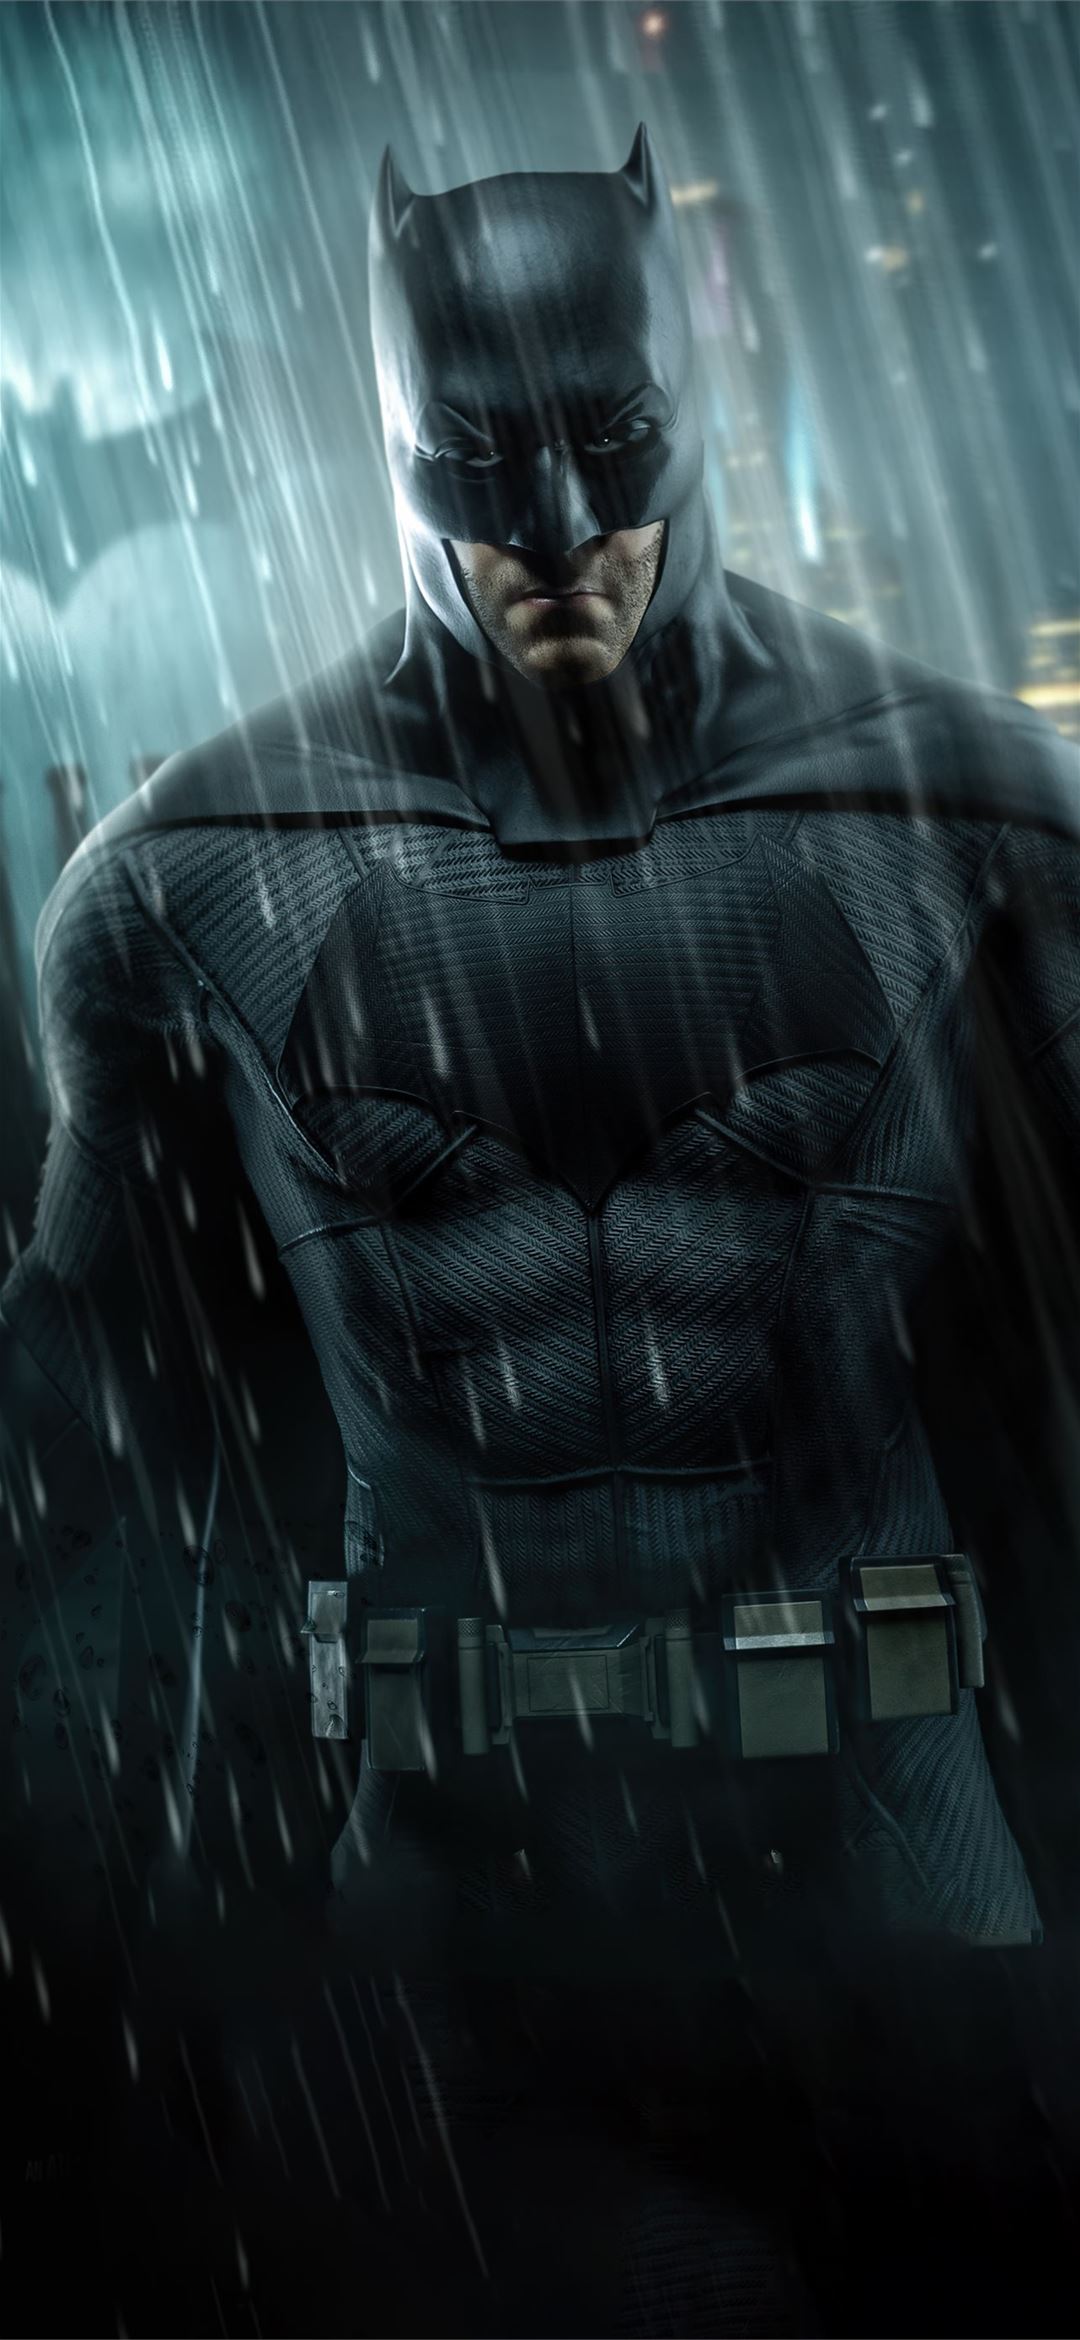 the batman movie poster 5k iPhone 12 Wallpaper Free Download